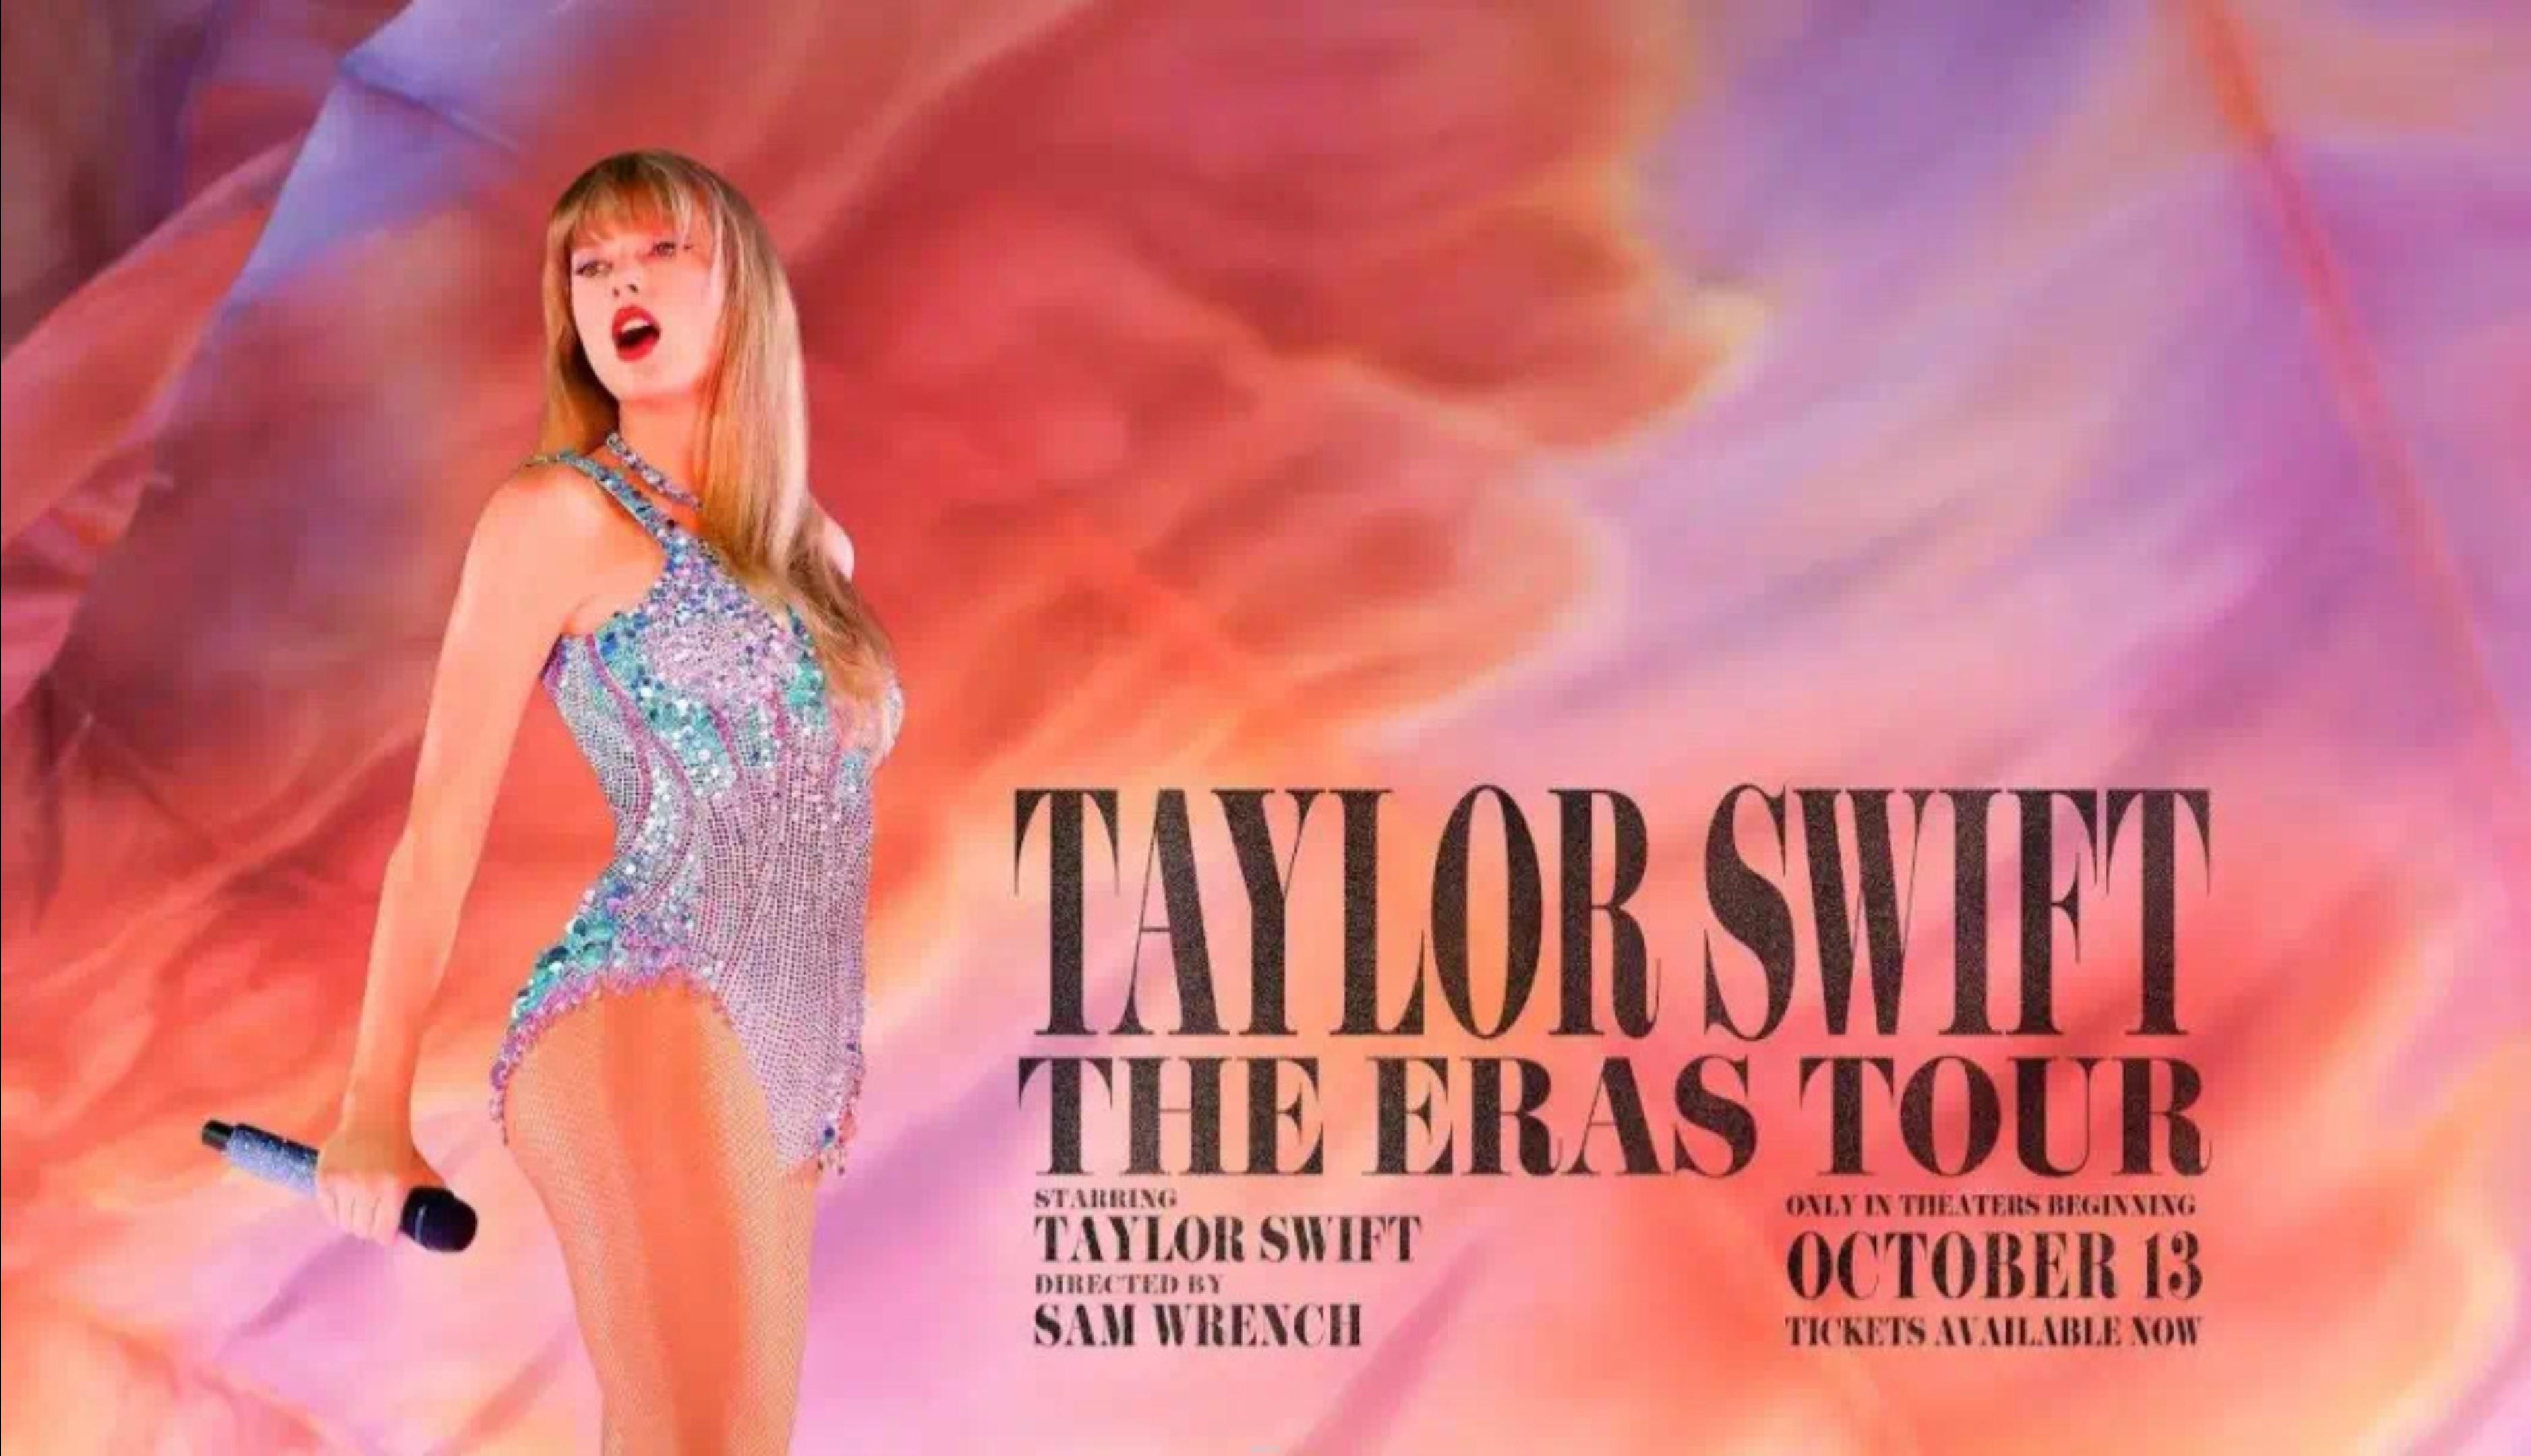 【⭐️考试宝典⭐️Taylor Swift The Eras Tour 时代巡演电影】流媒体原声+黑底白字纯英文字幕-1.jpg